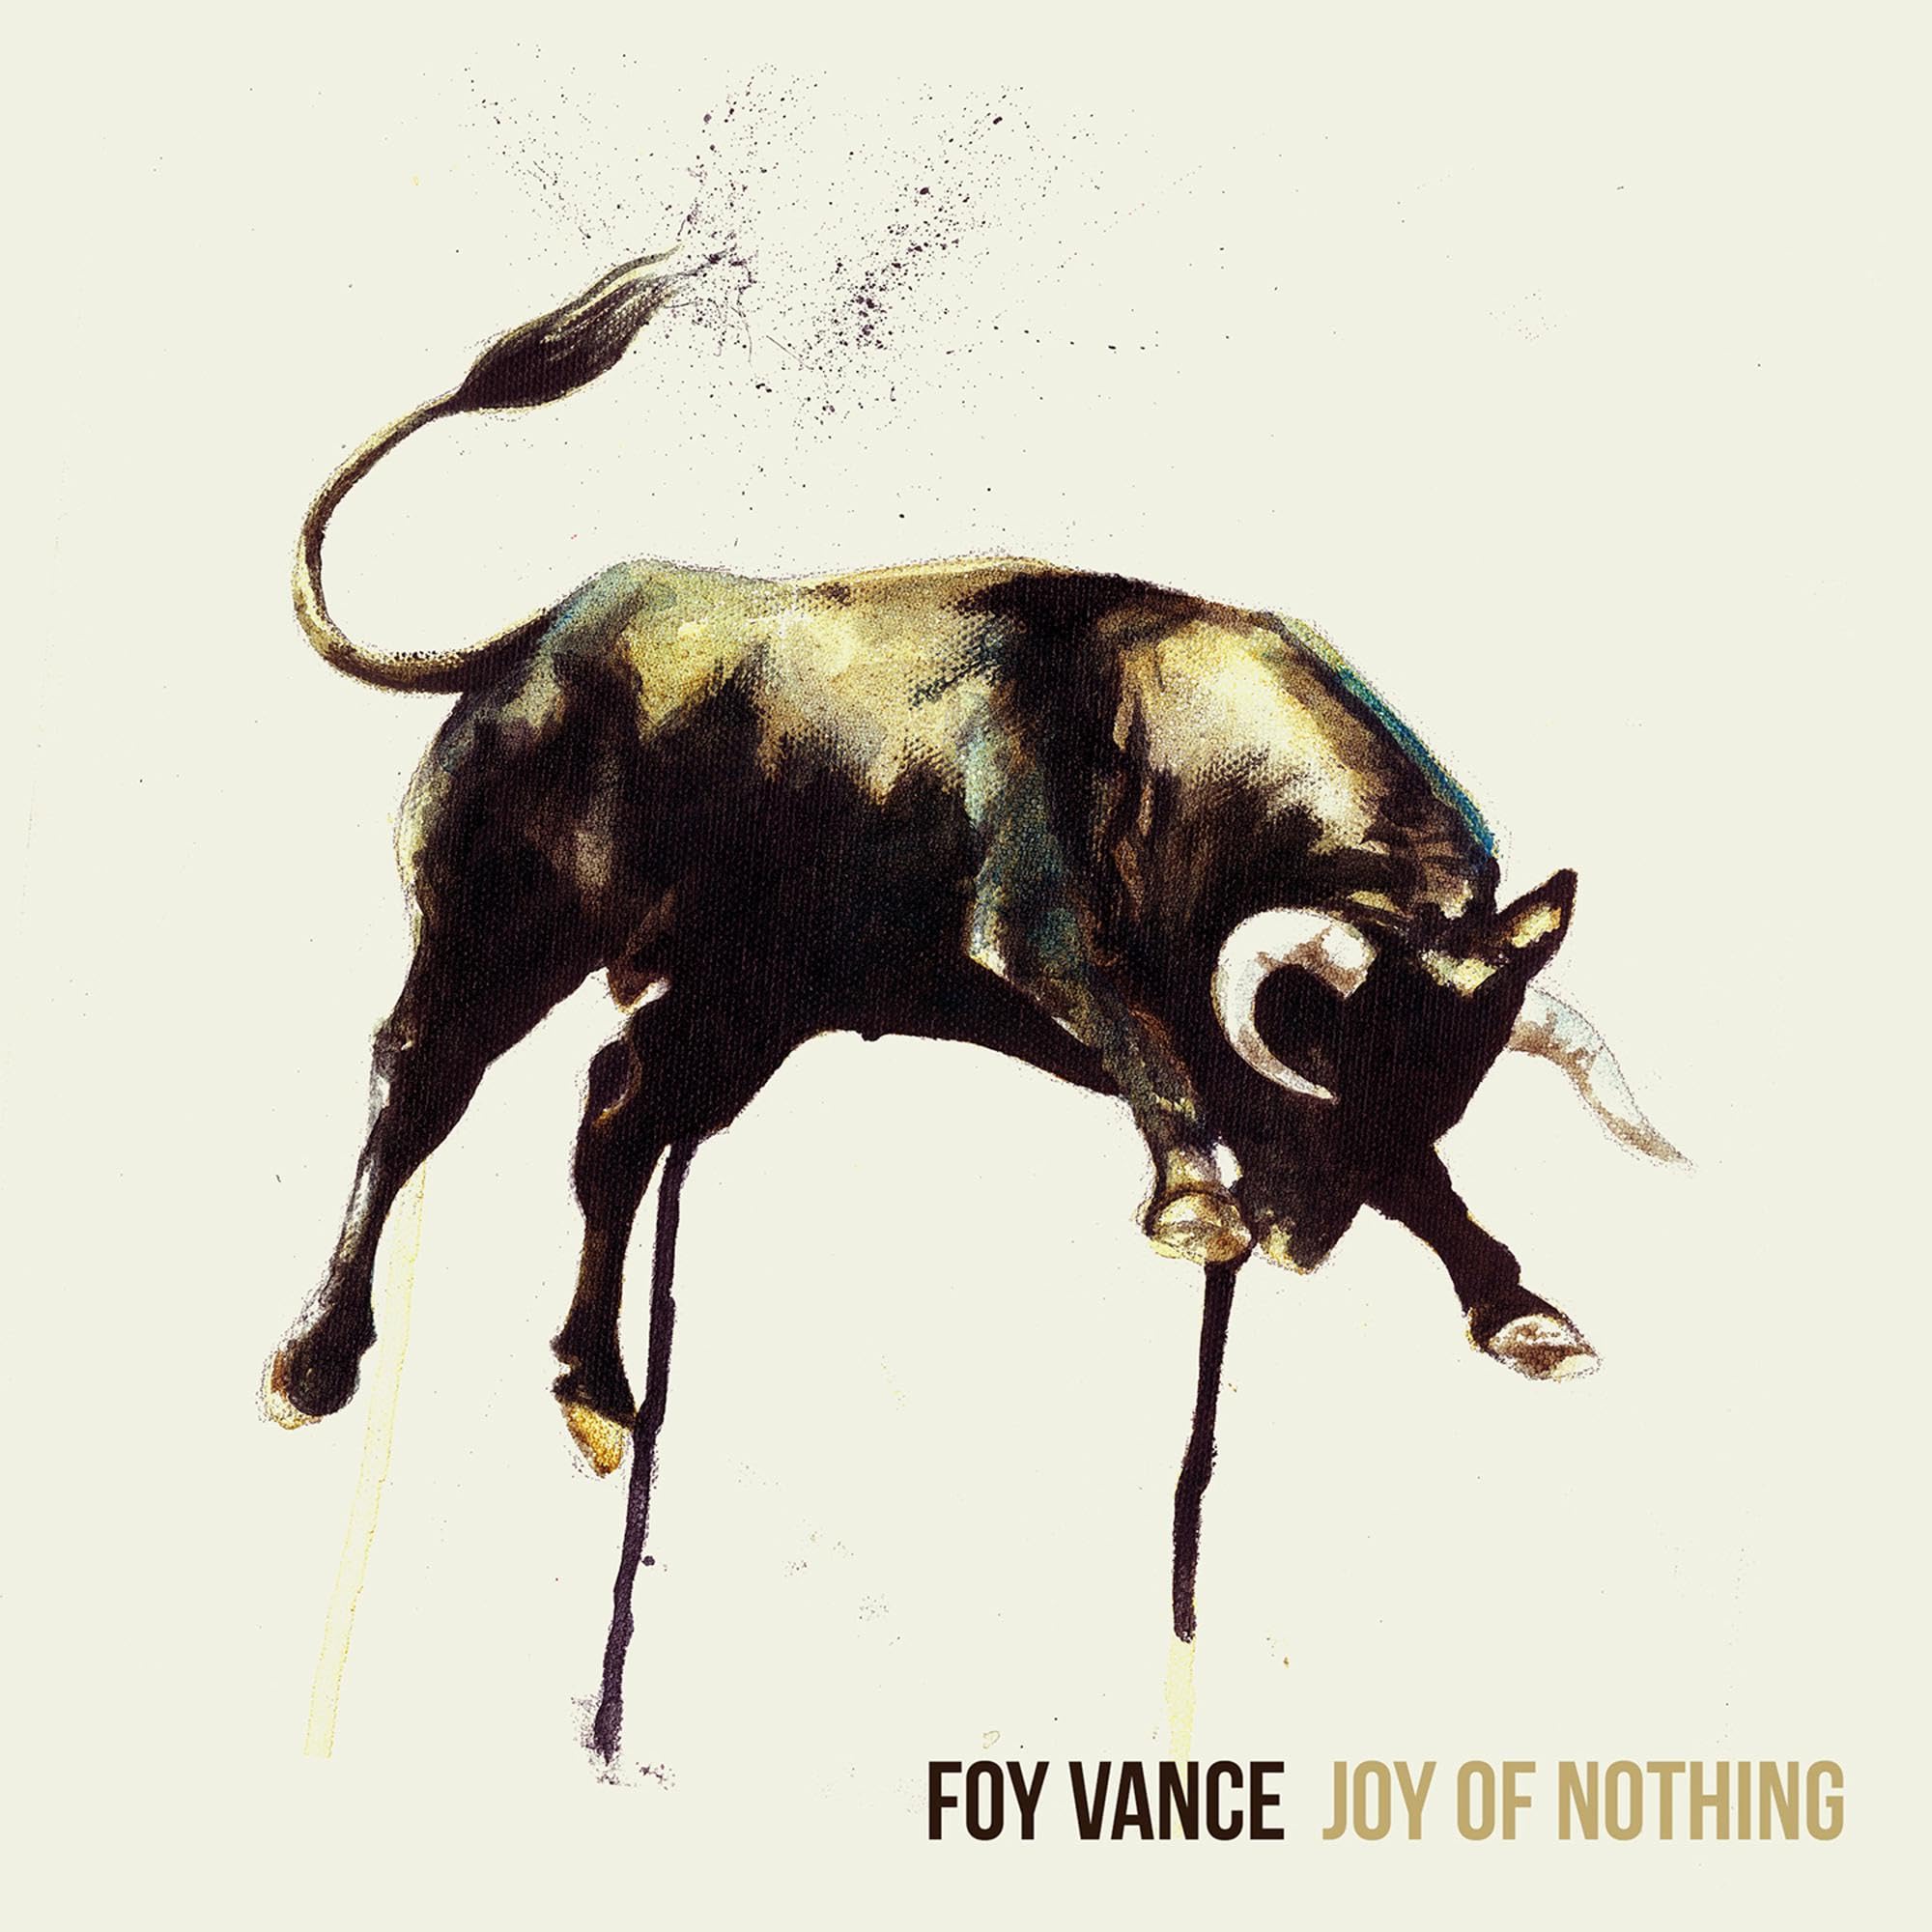 Vinile Foy Vance - Joy Of Nothing (Gold And Black Marble Vinyl) NUOVO SIGILLATO SUBITO DISPONIBILE